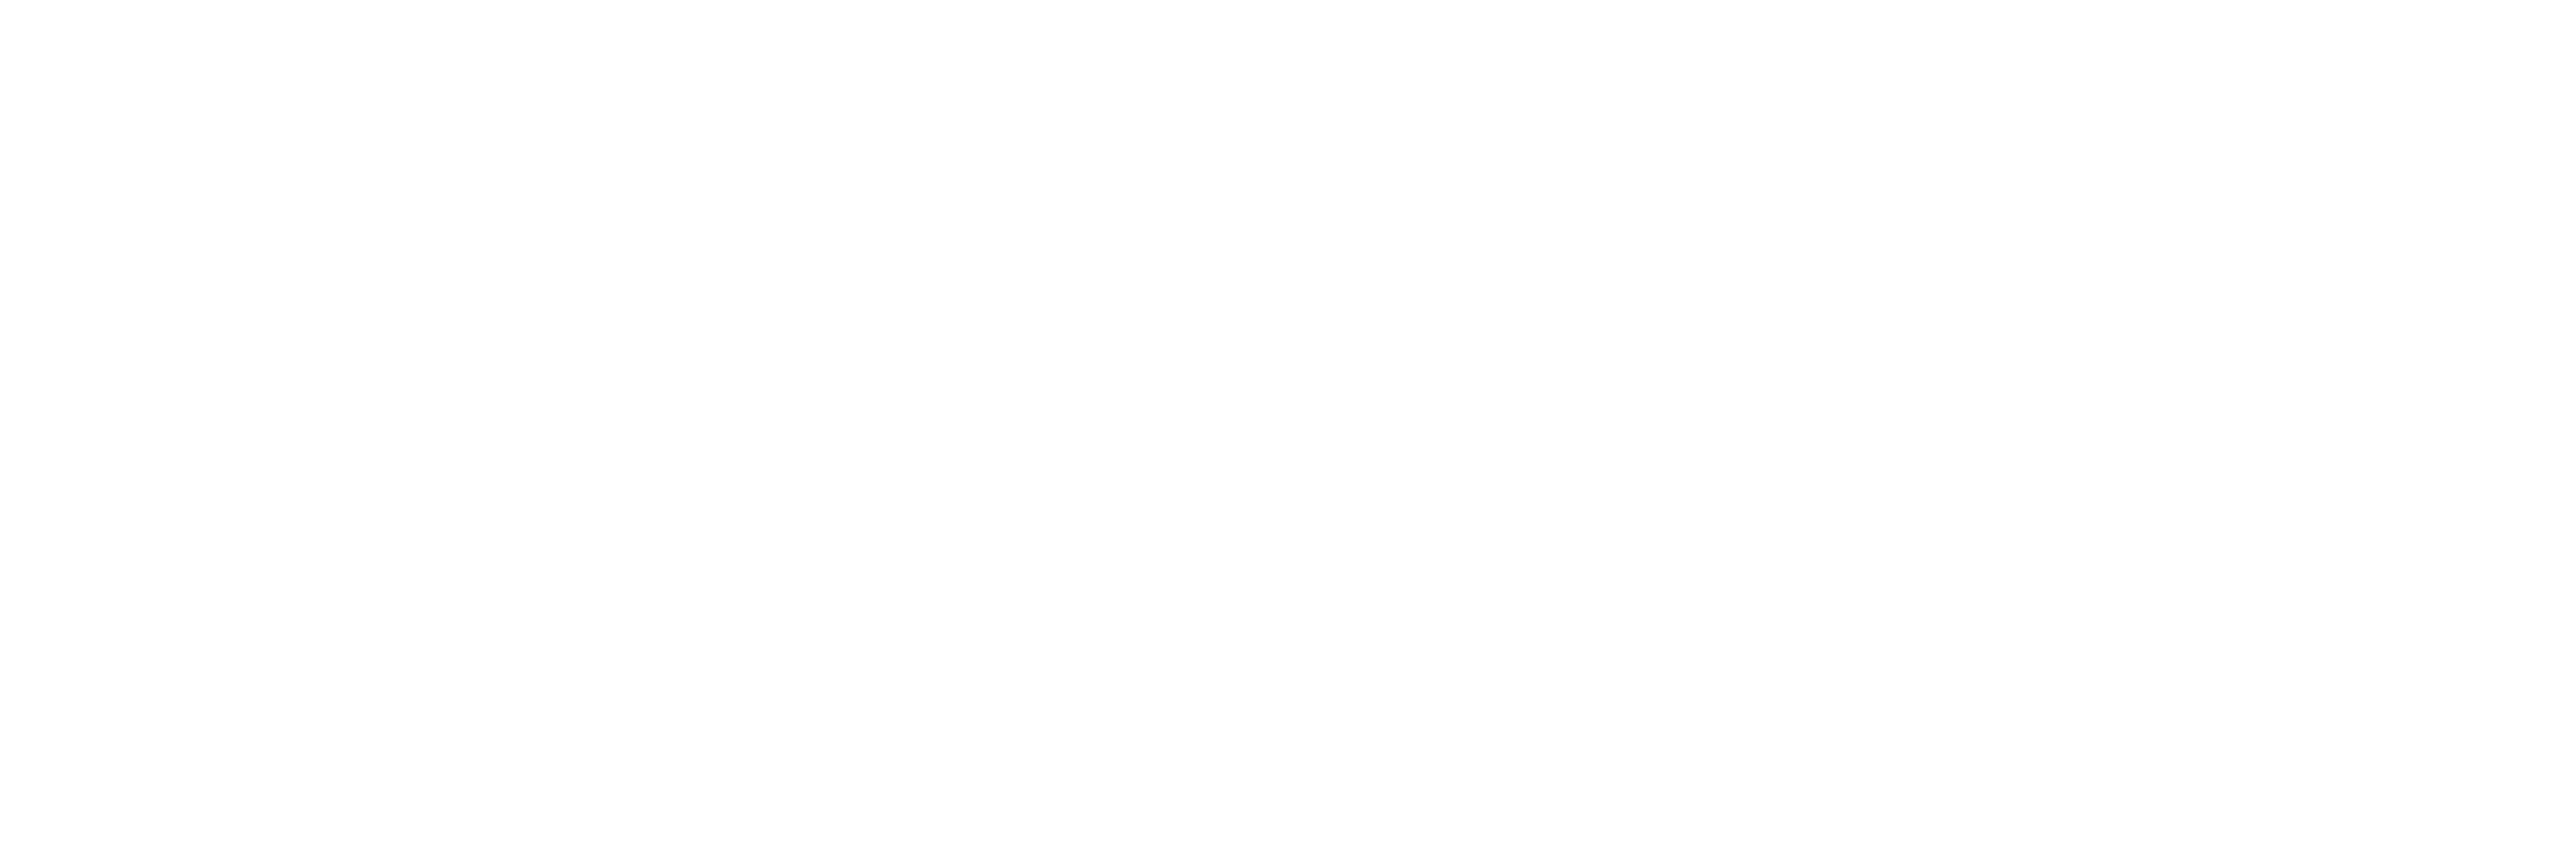 Paul Pacifico